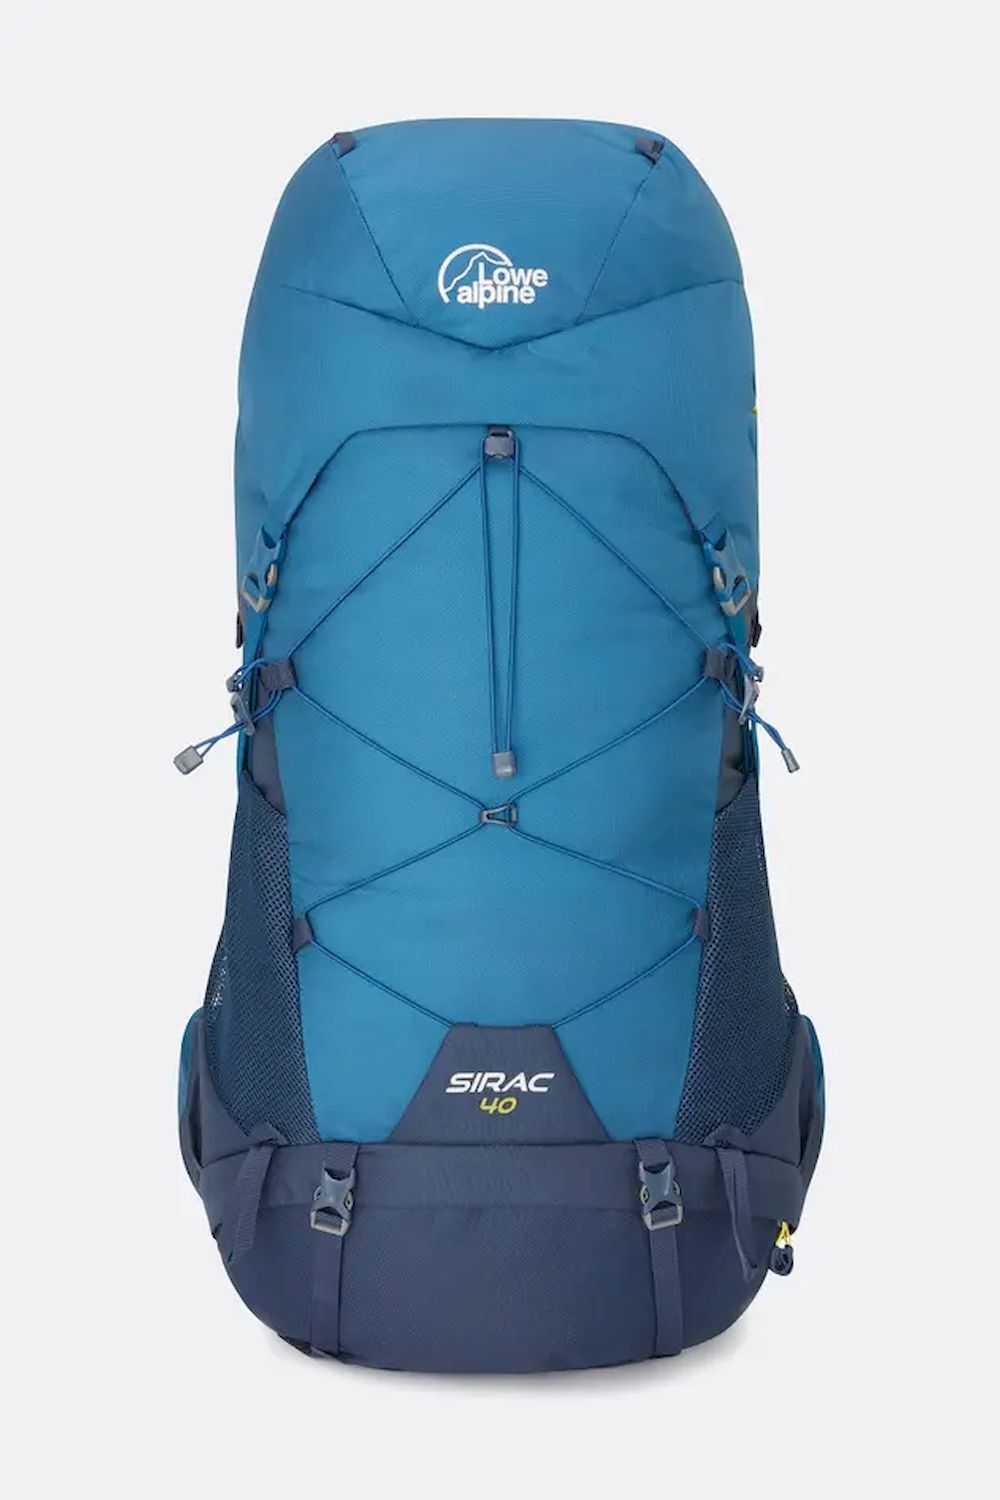 Lowe Alpine Sirac 40 - Walking backpack - Men's